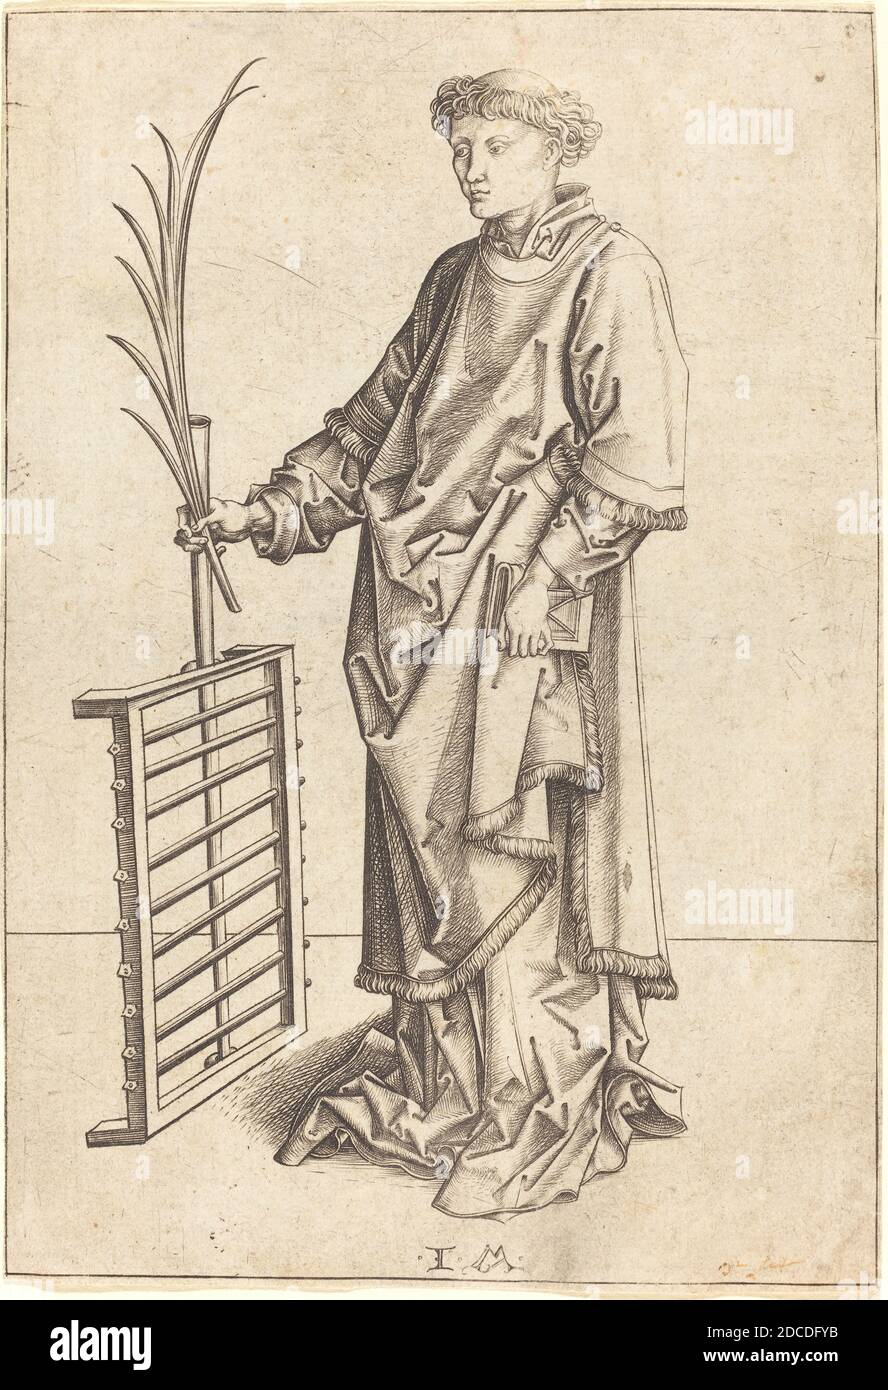 Israhel van Meckenem, (artist), German, c. 1445 - 1503, Martin Schongauer, (artist after), German, c. 1450 - 1491, Saint Lawrence, c. 1480/1490, engraving Stock Photo